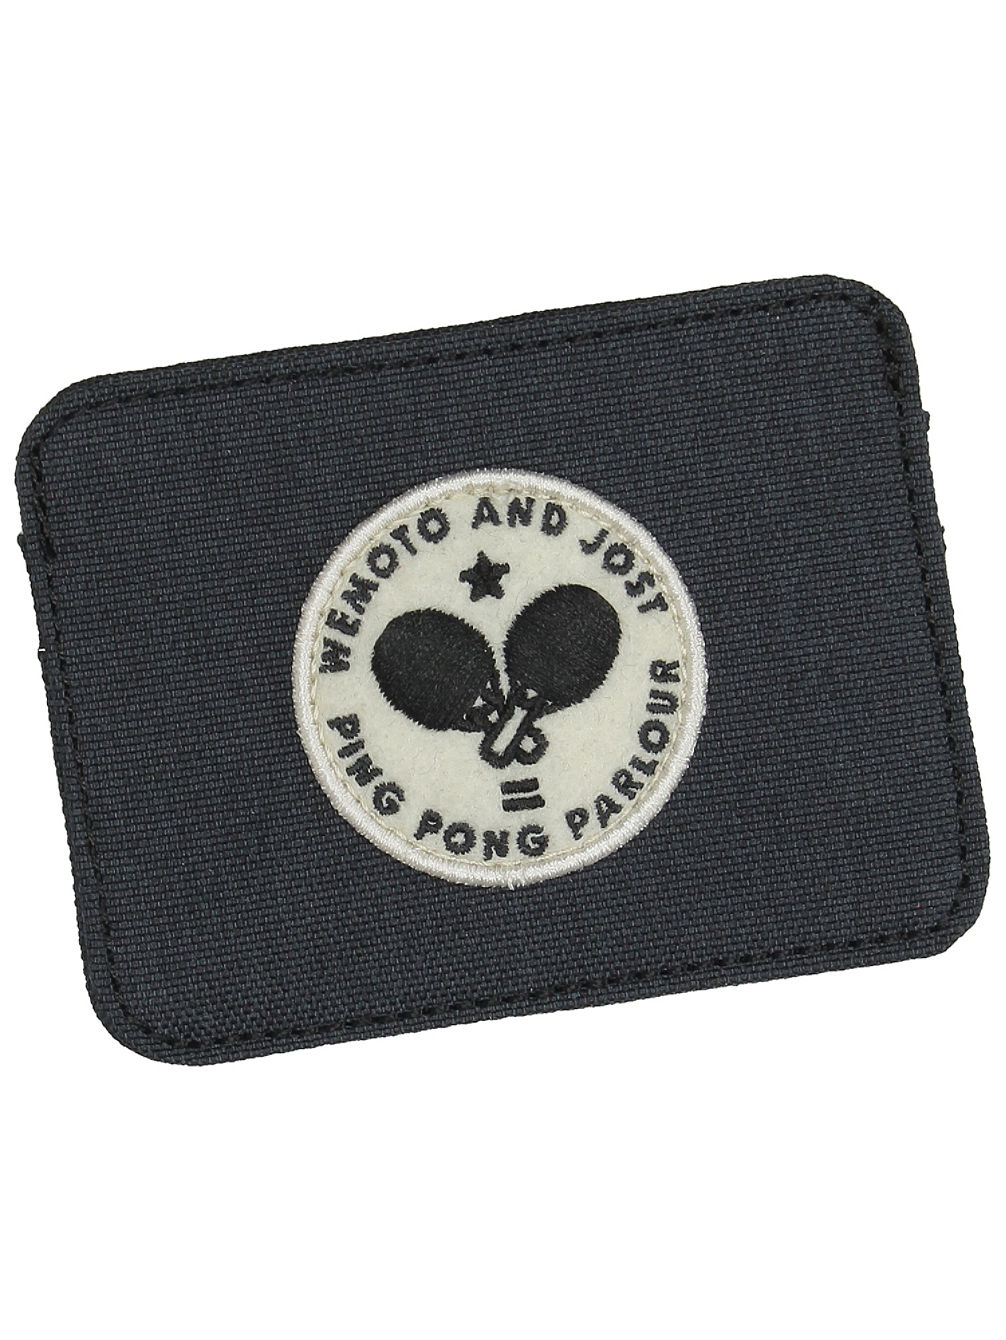 X Jost Ping Pong Parlour Car Holder Wallet